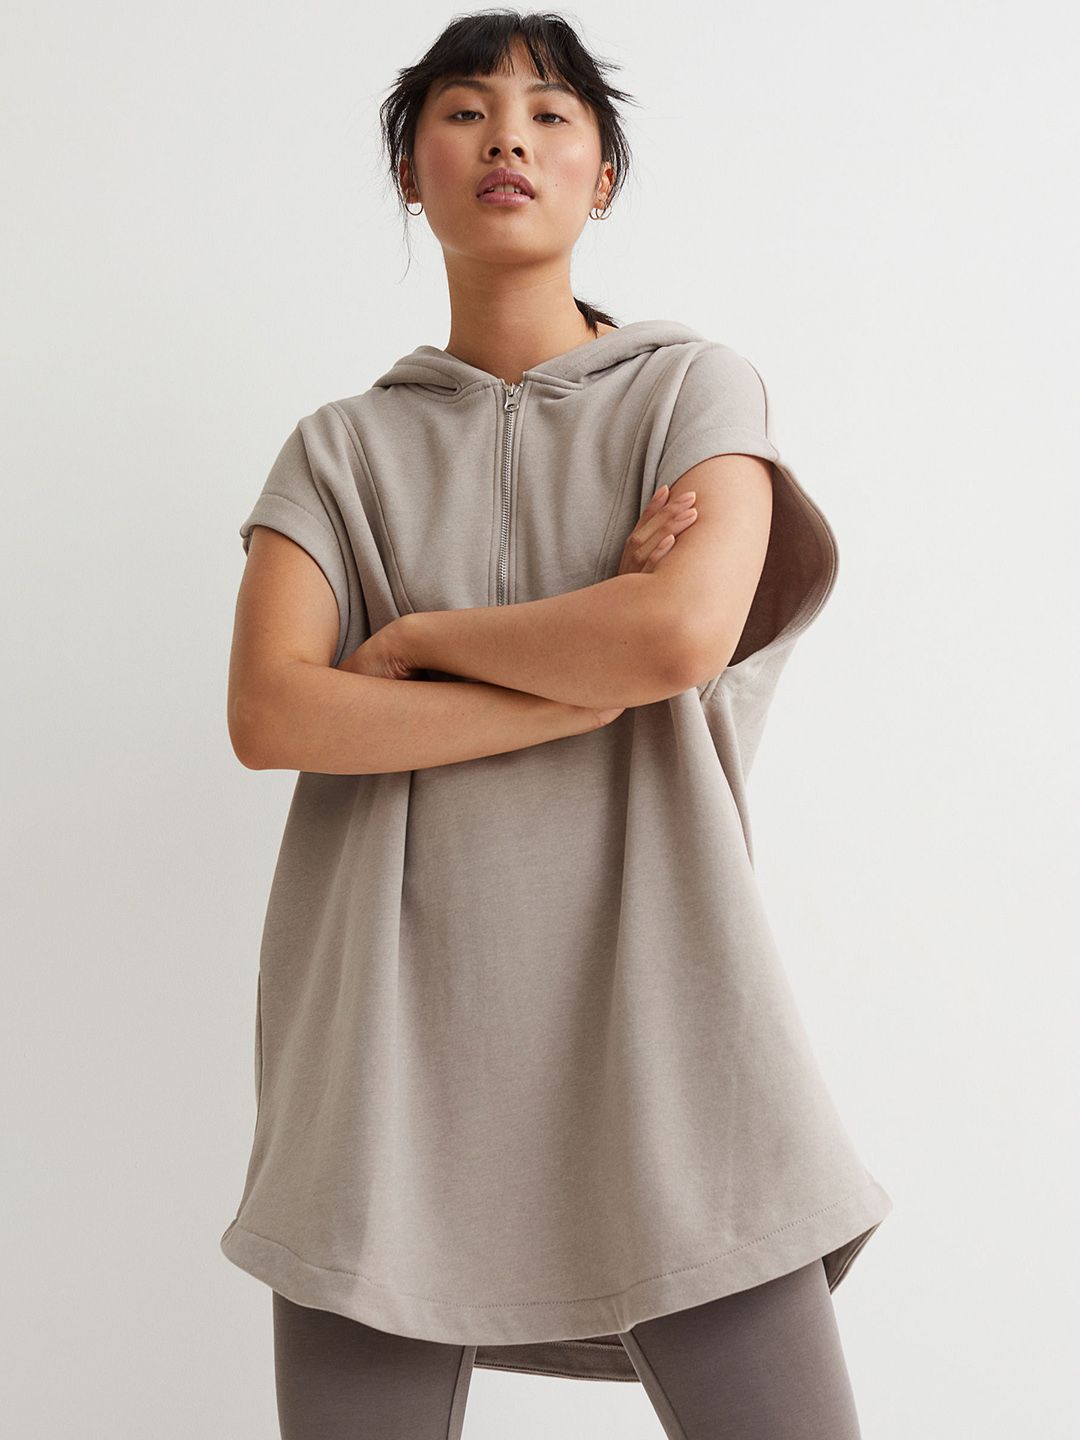 H&M Woman Grey Sleeveless hoodie Price in India